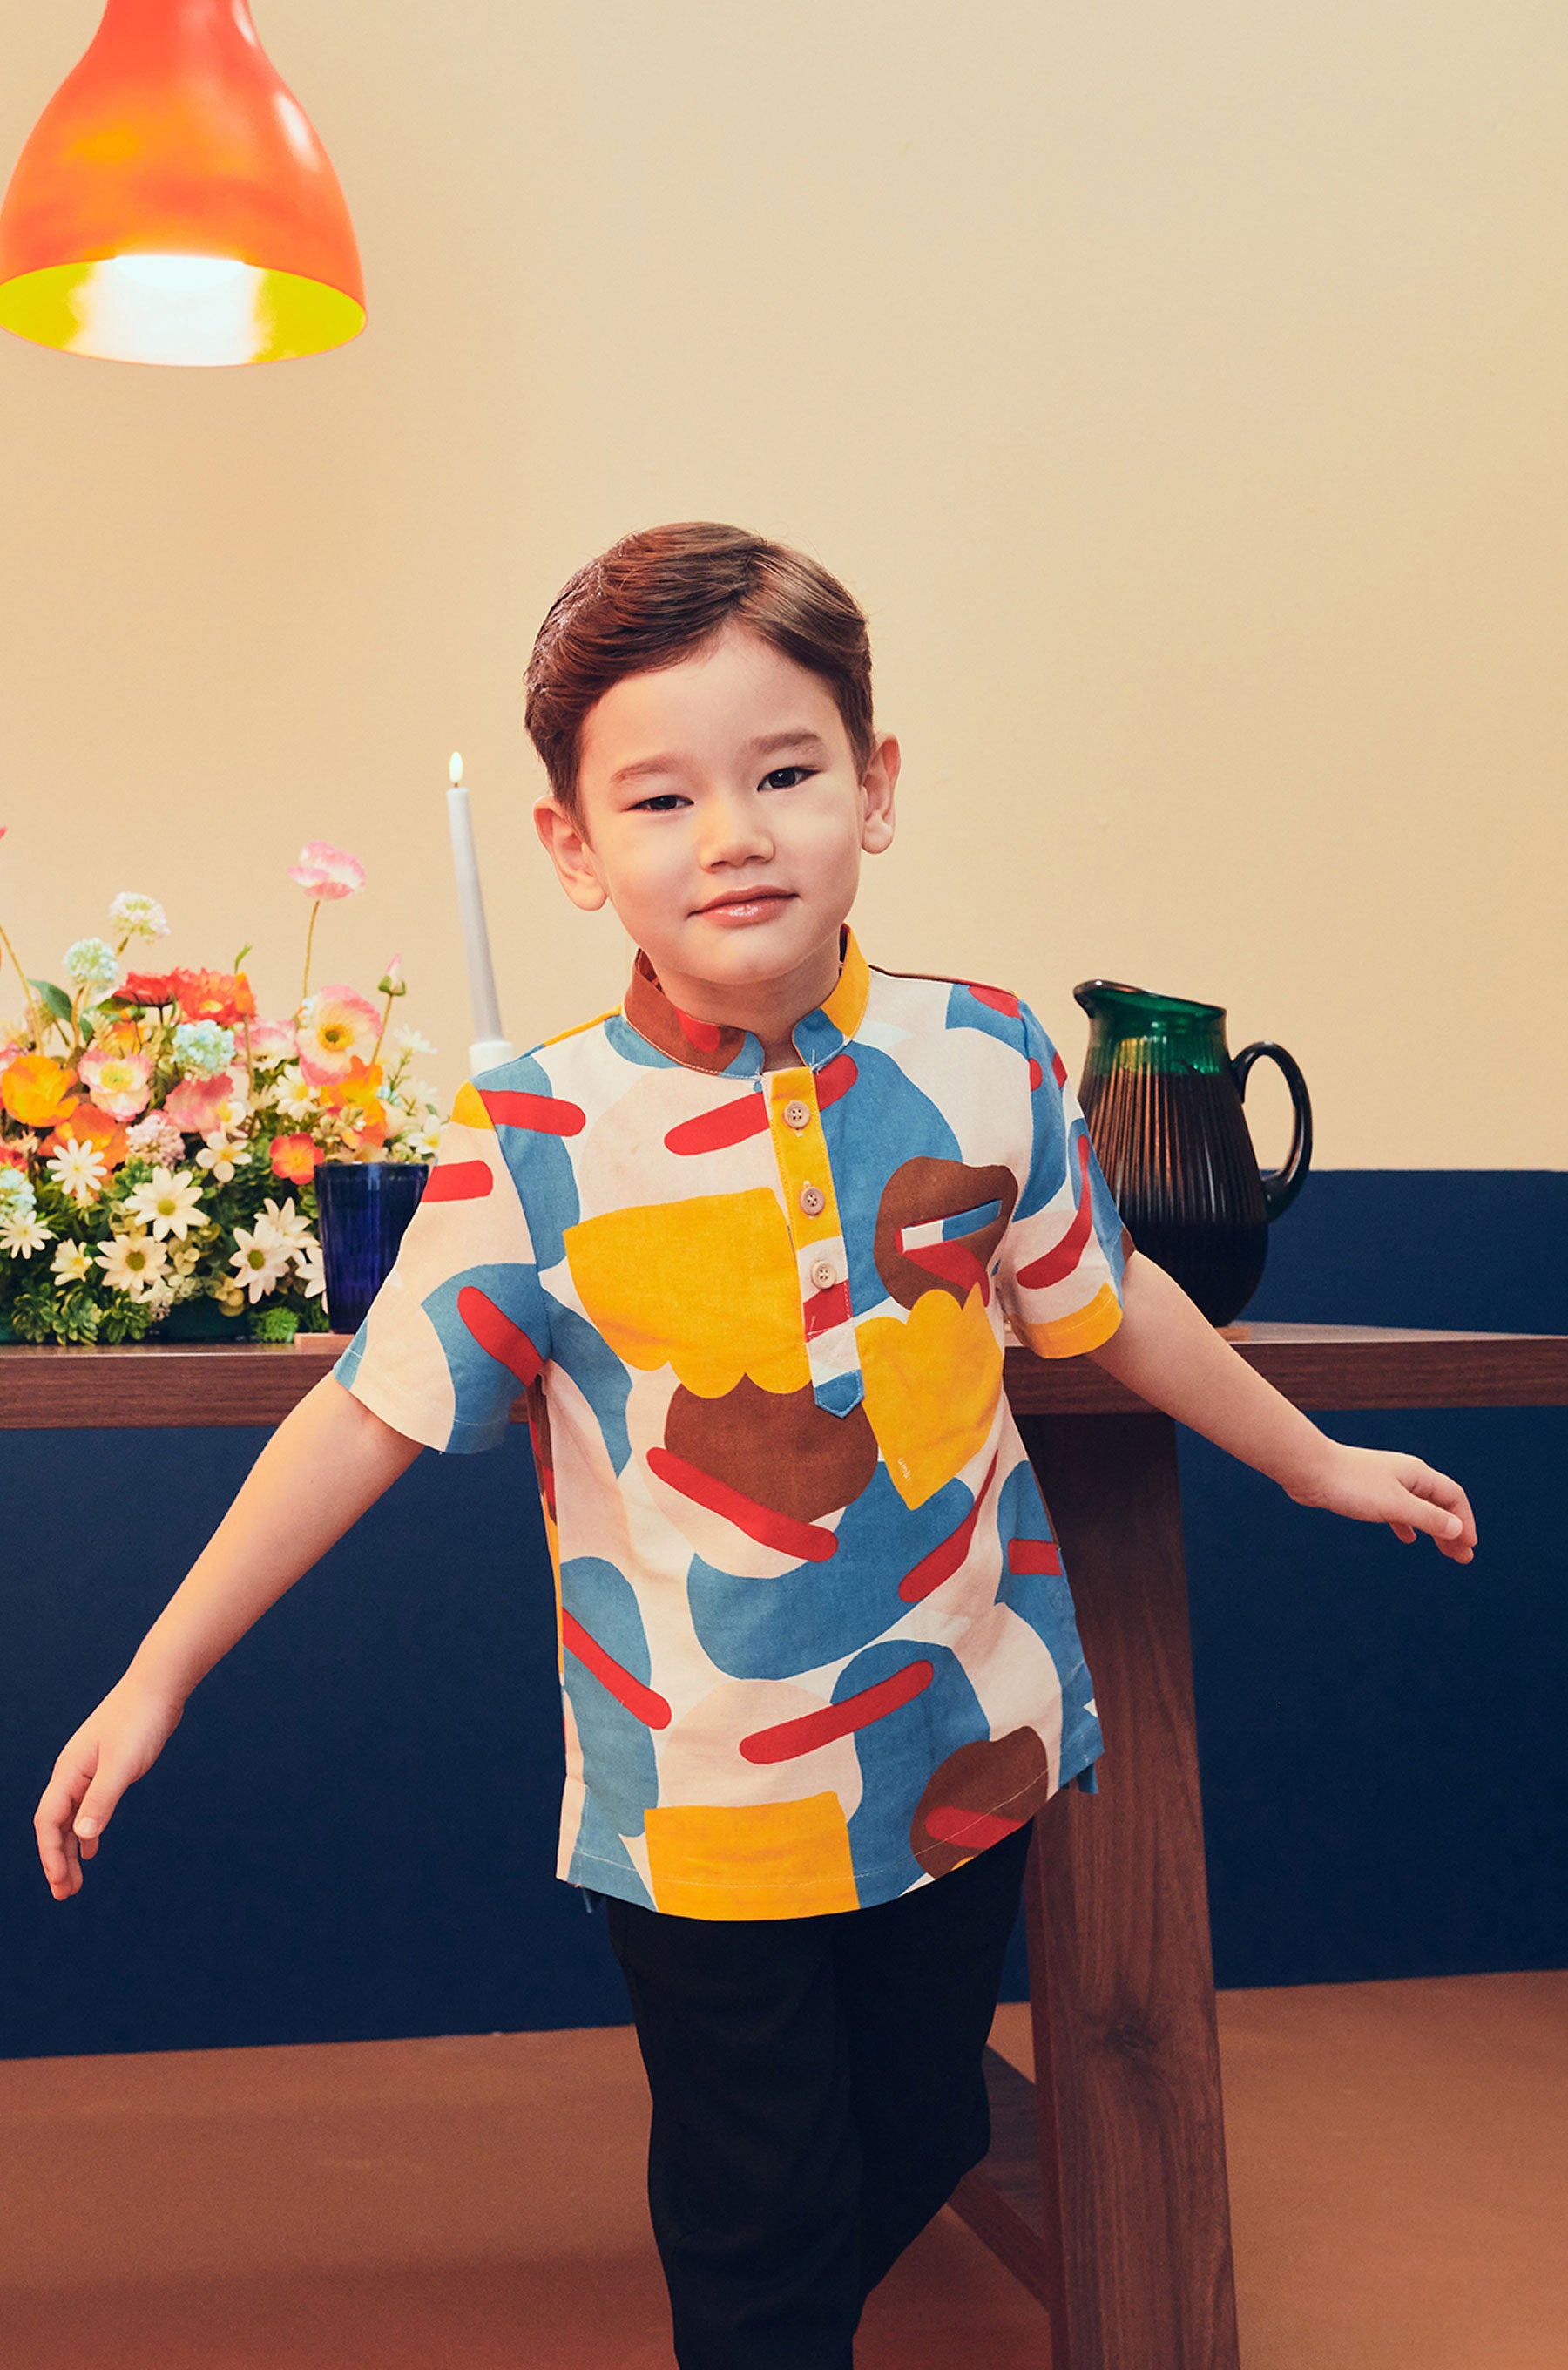 baju raya family sedondon kids boy shirt jellybean print